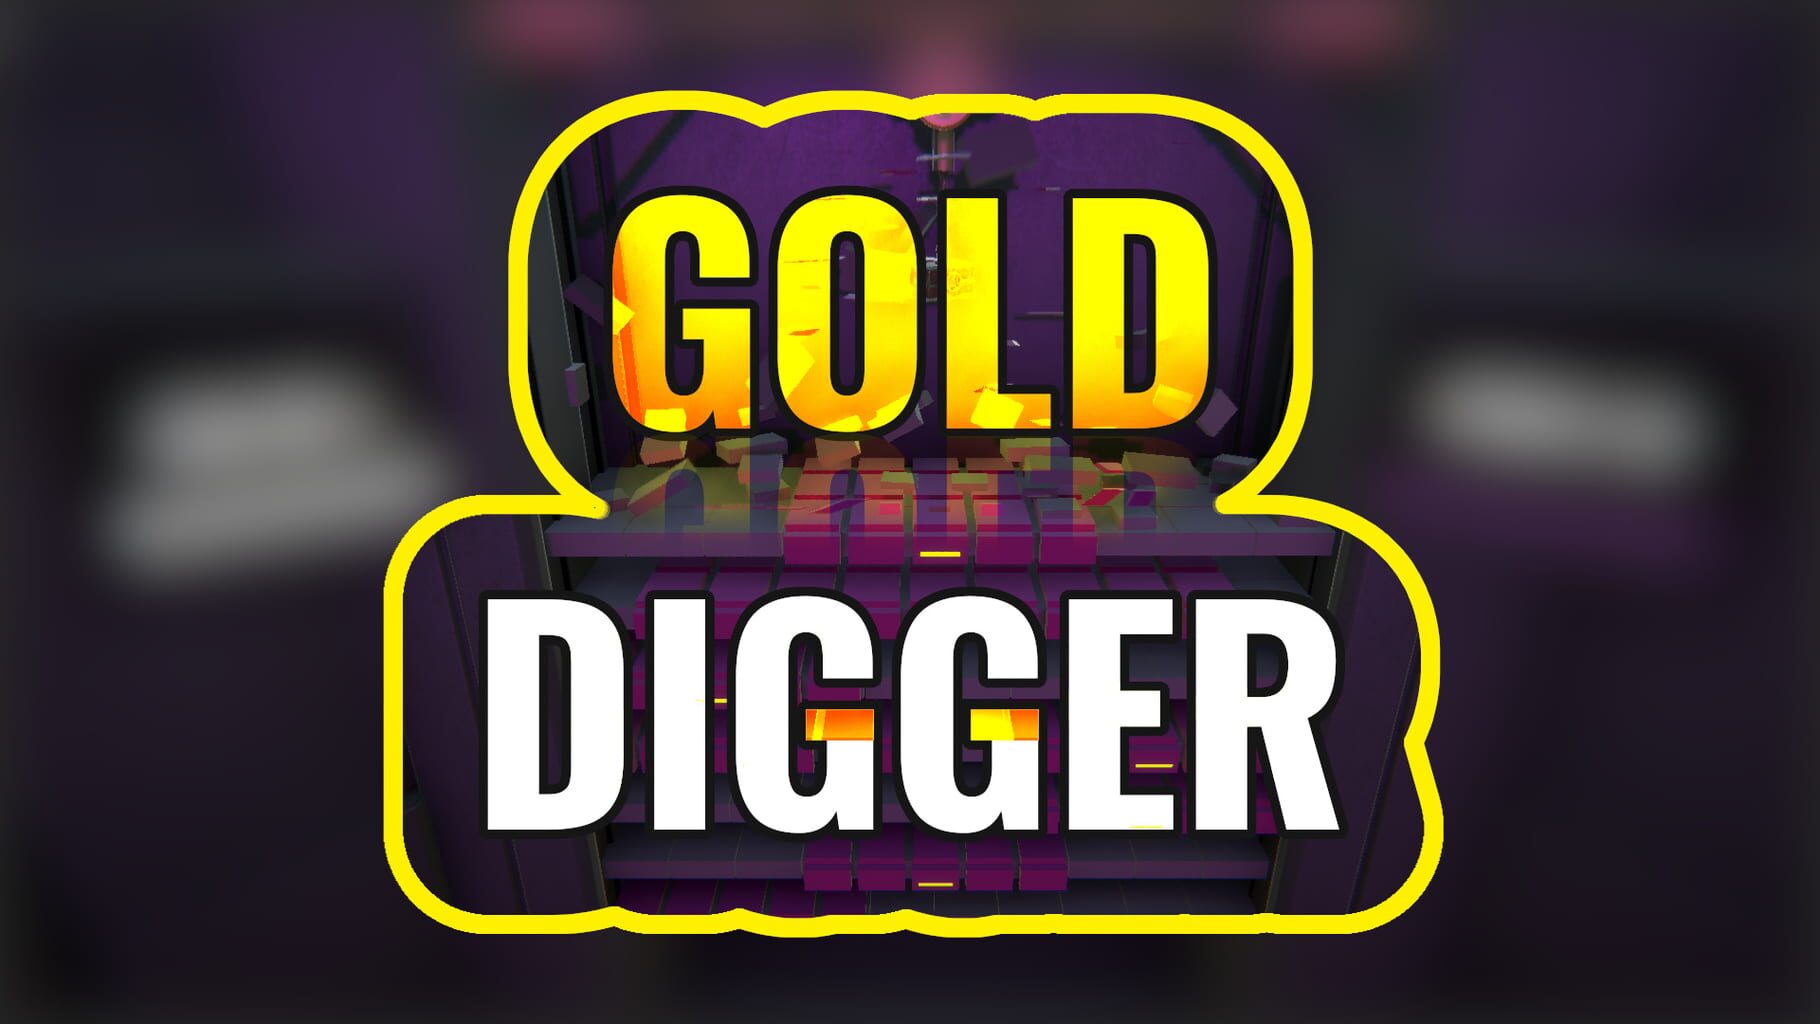 Gold Digger artwork